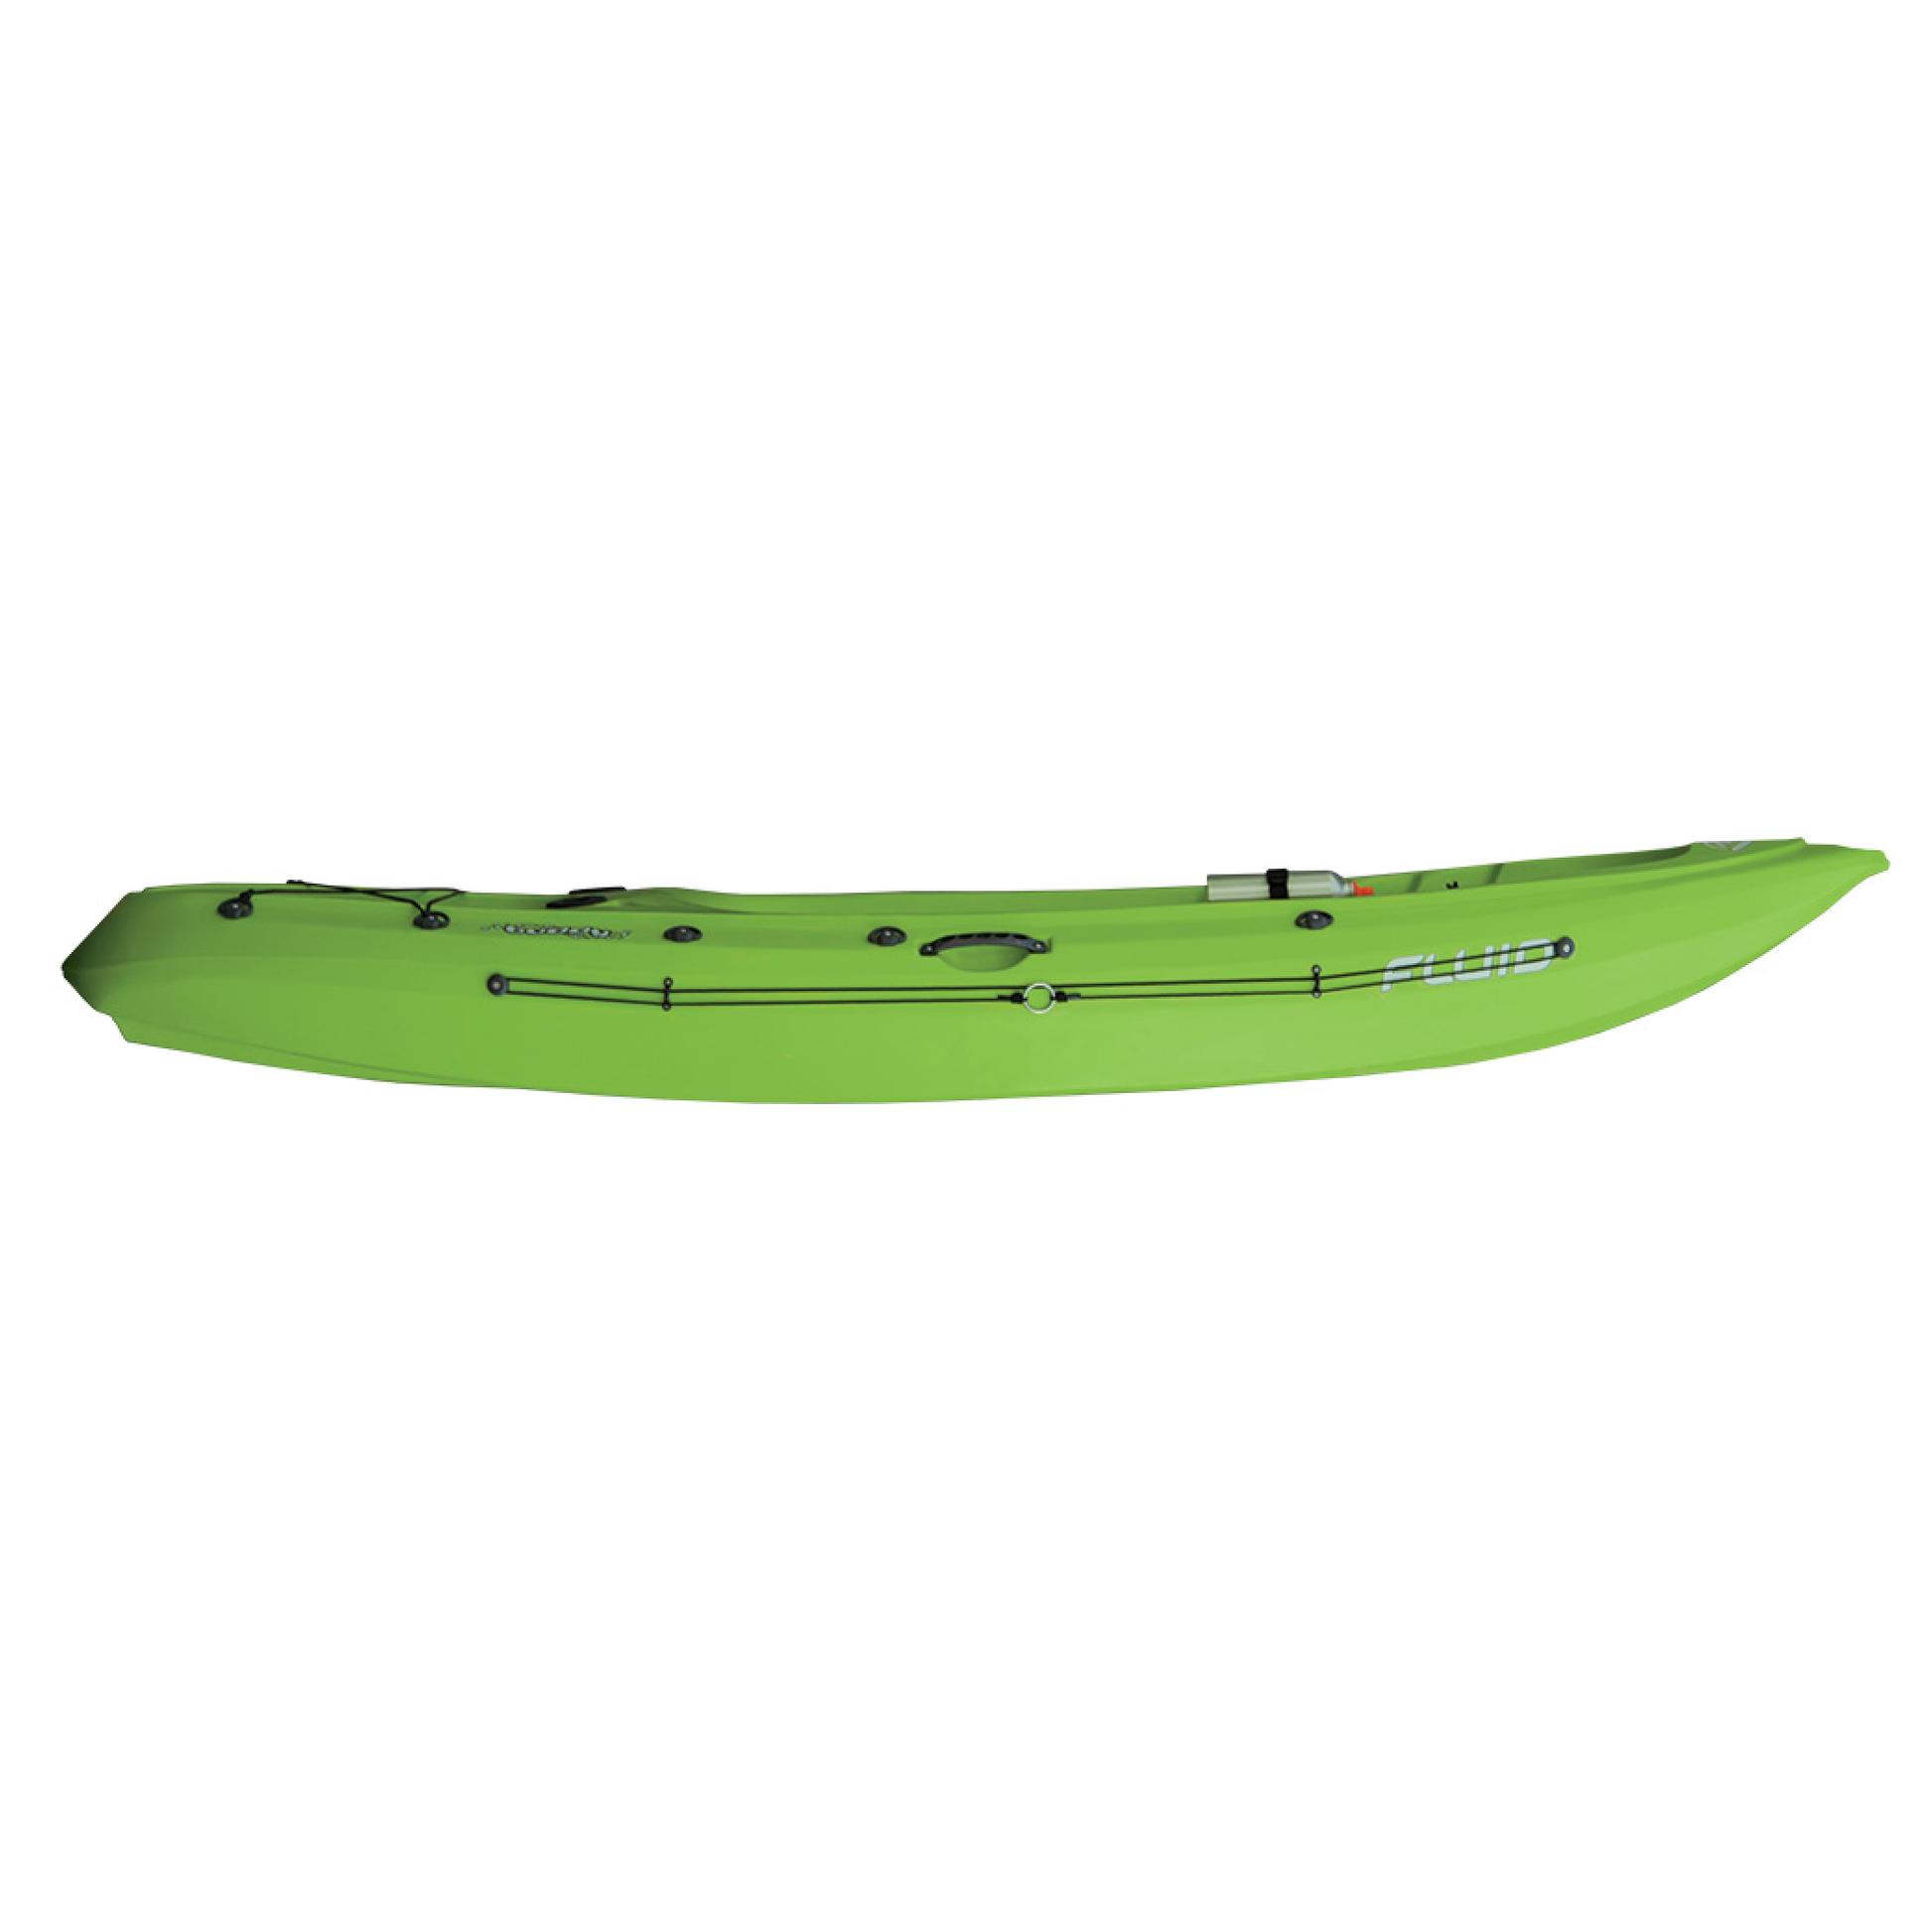 Fluid Buddy Angler Kayak - Wild Coast Kayaks